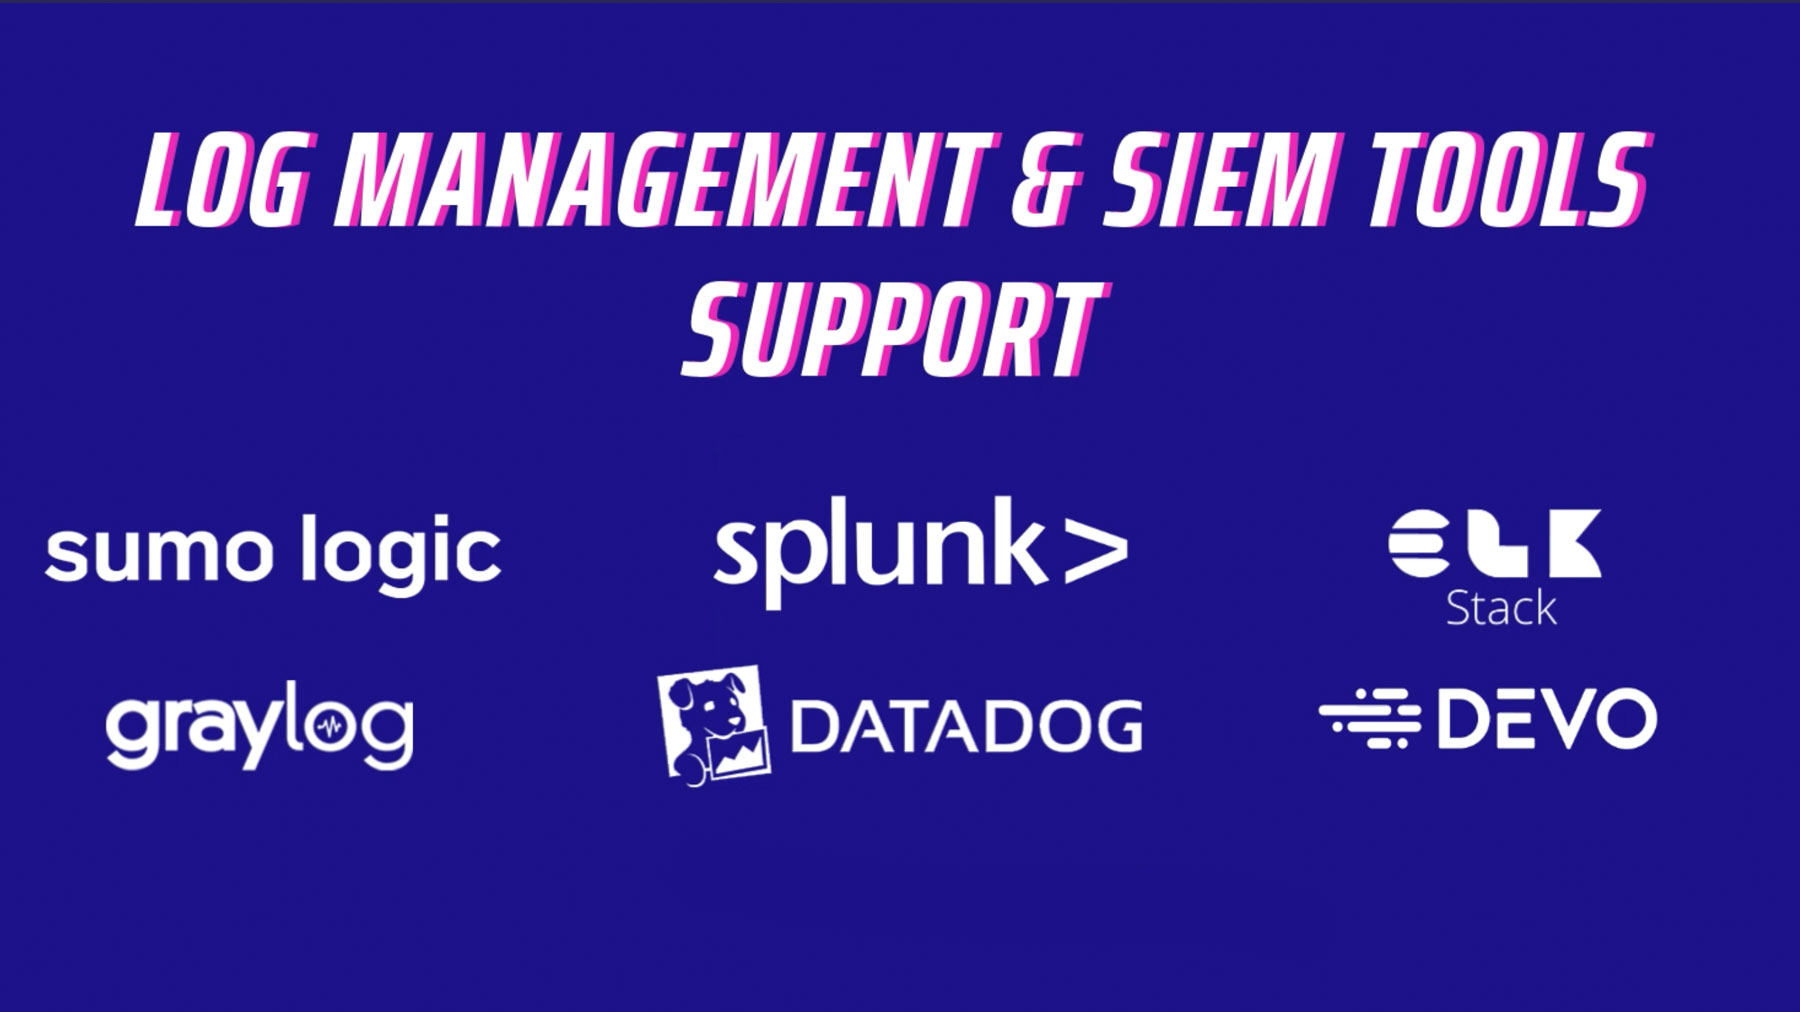 passwordless_log_management_siem_support